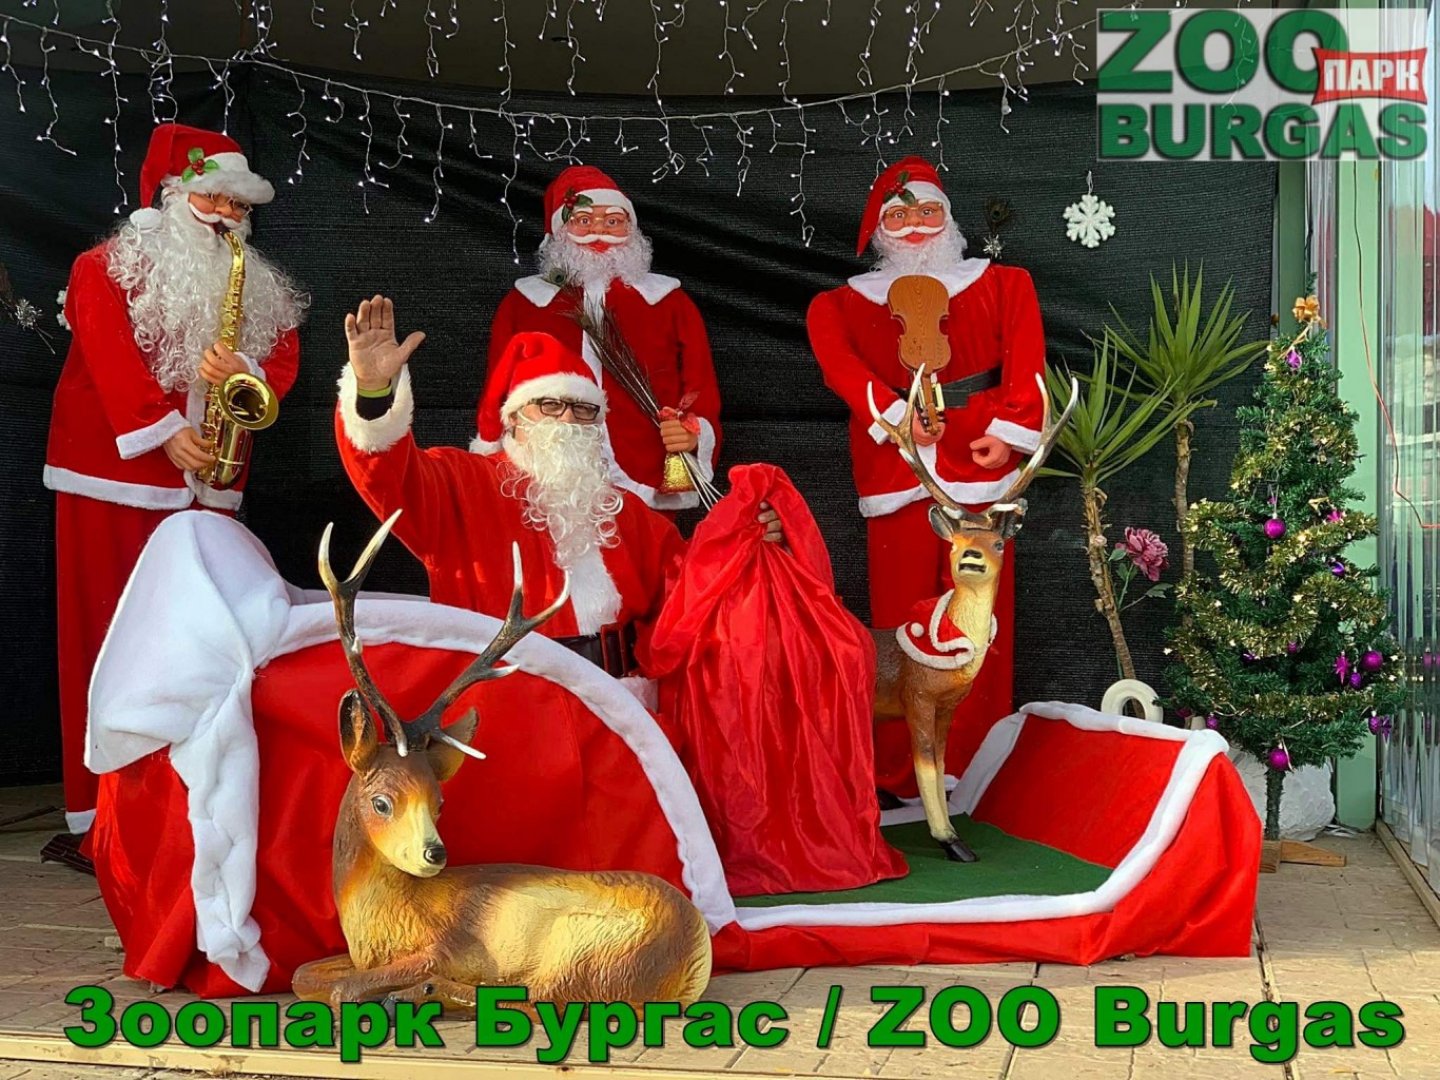 Зоопарк Бургас със специална празнична програма до Коледа - E-Burgas.com